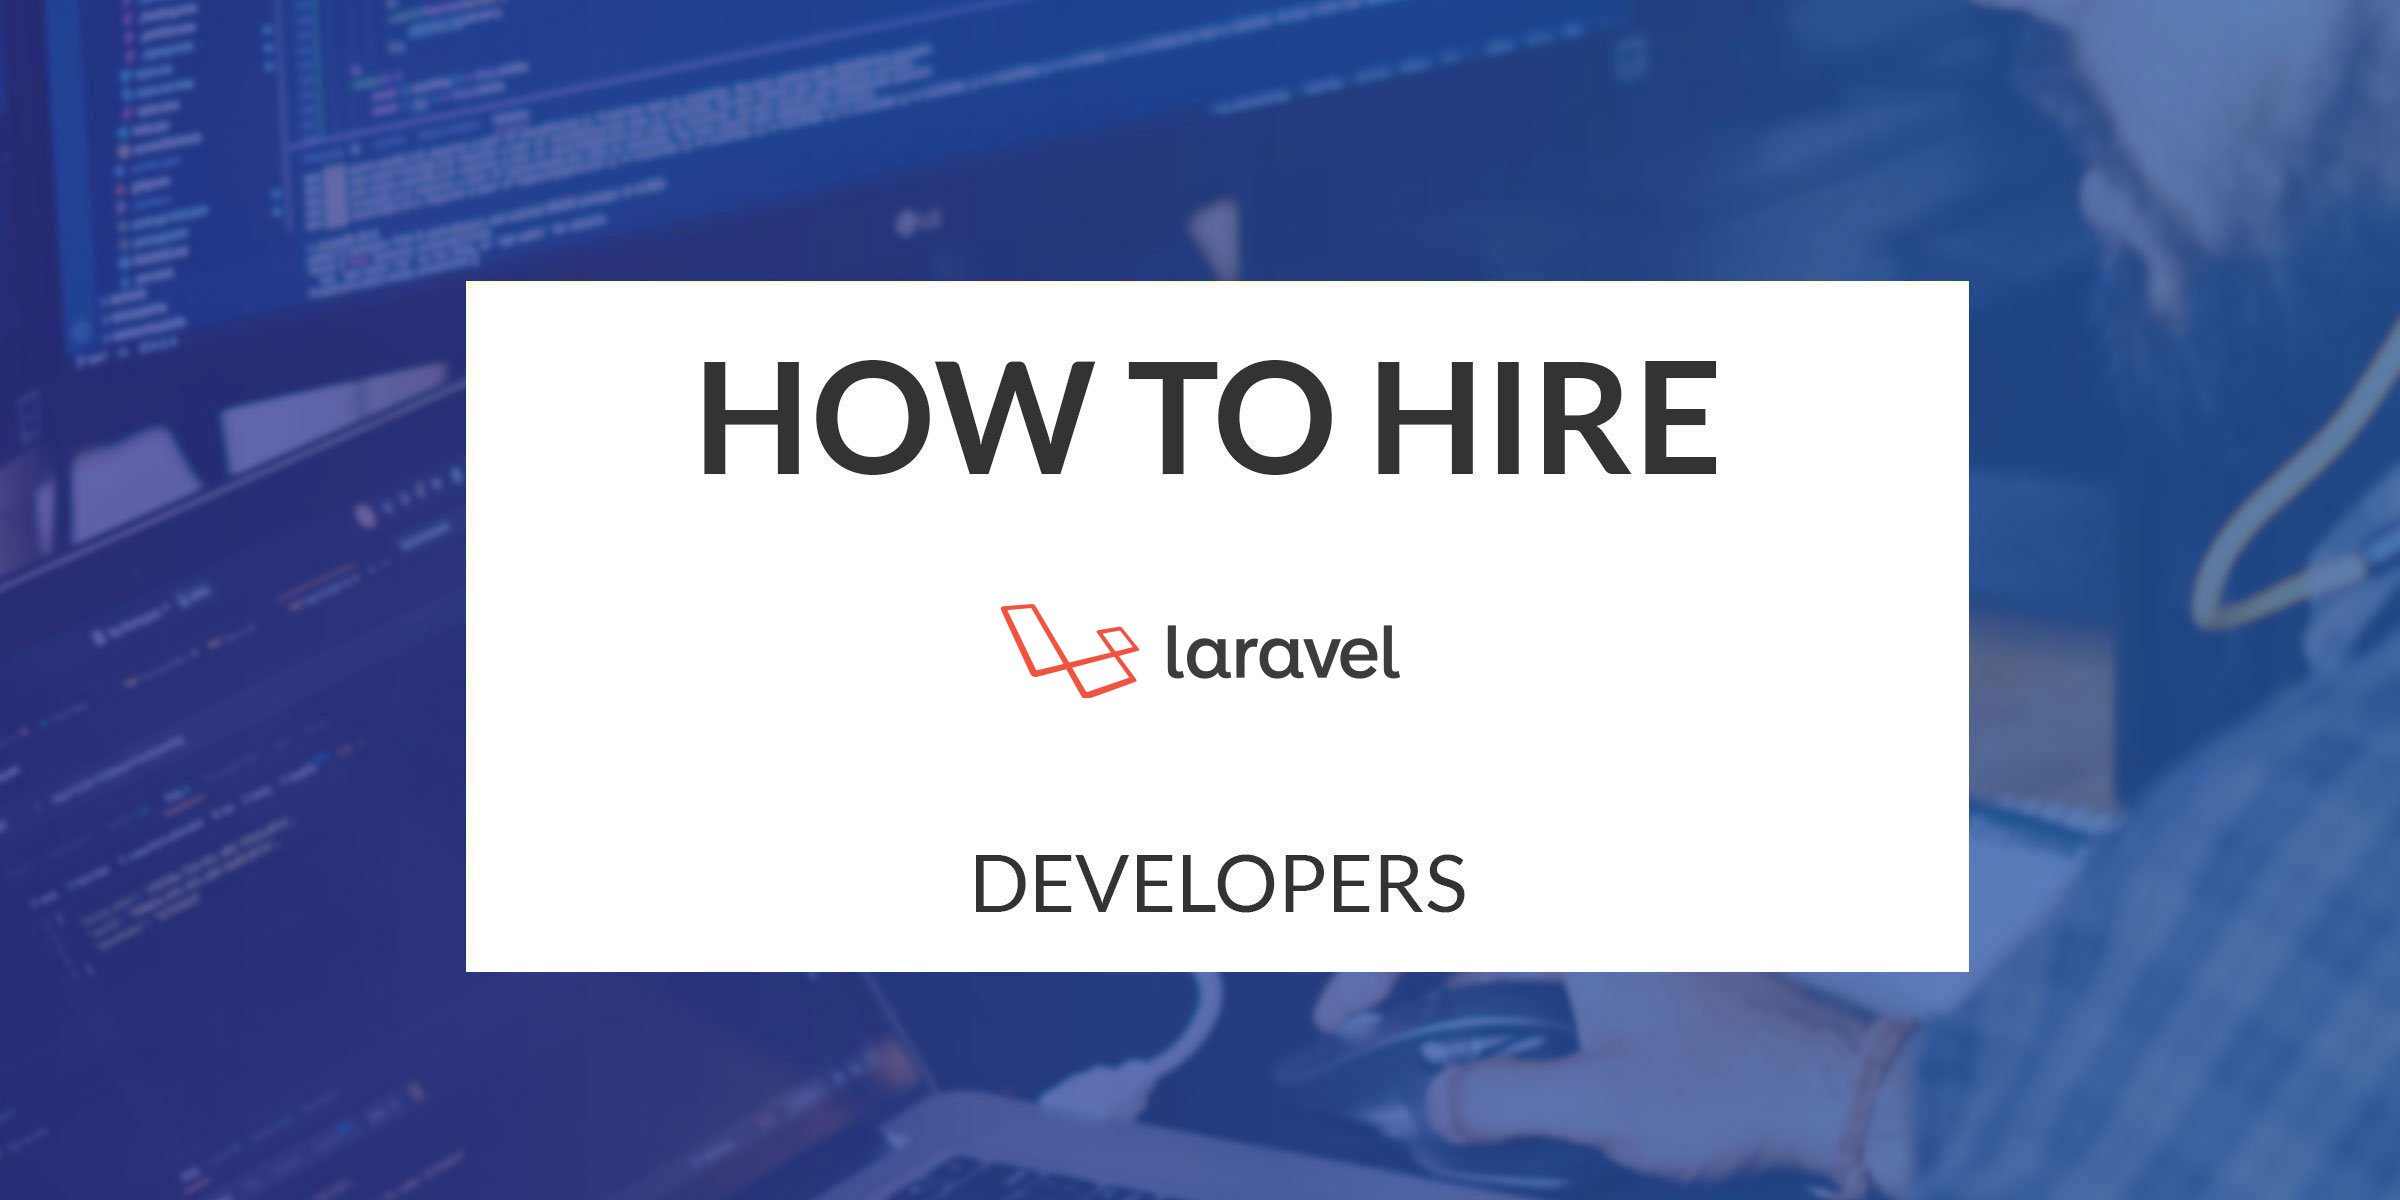 How to Hire PHP Laravel Developer